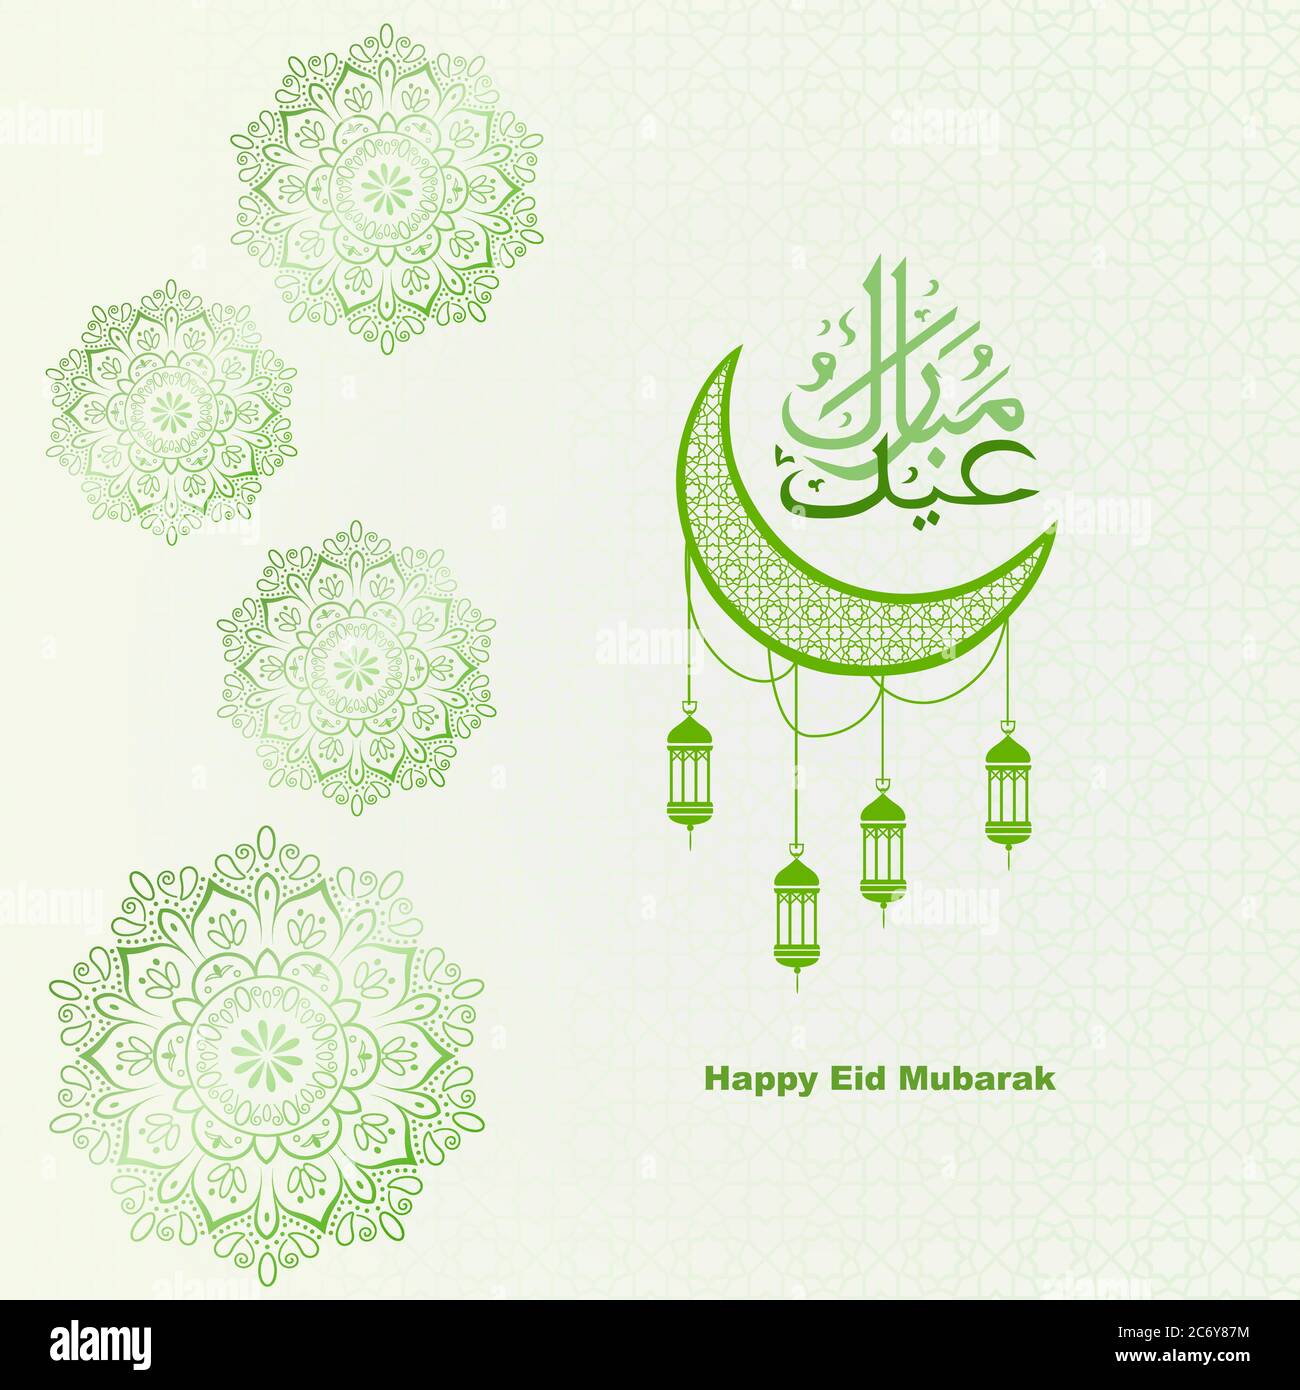 Eid mubarak calligraphy for greeting muslim celebration Stock Vector